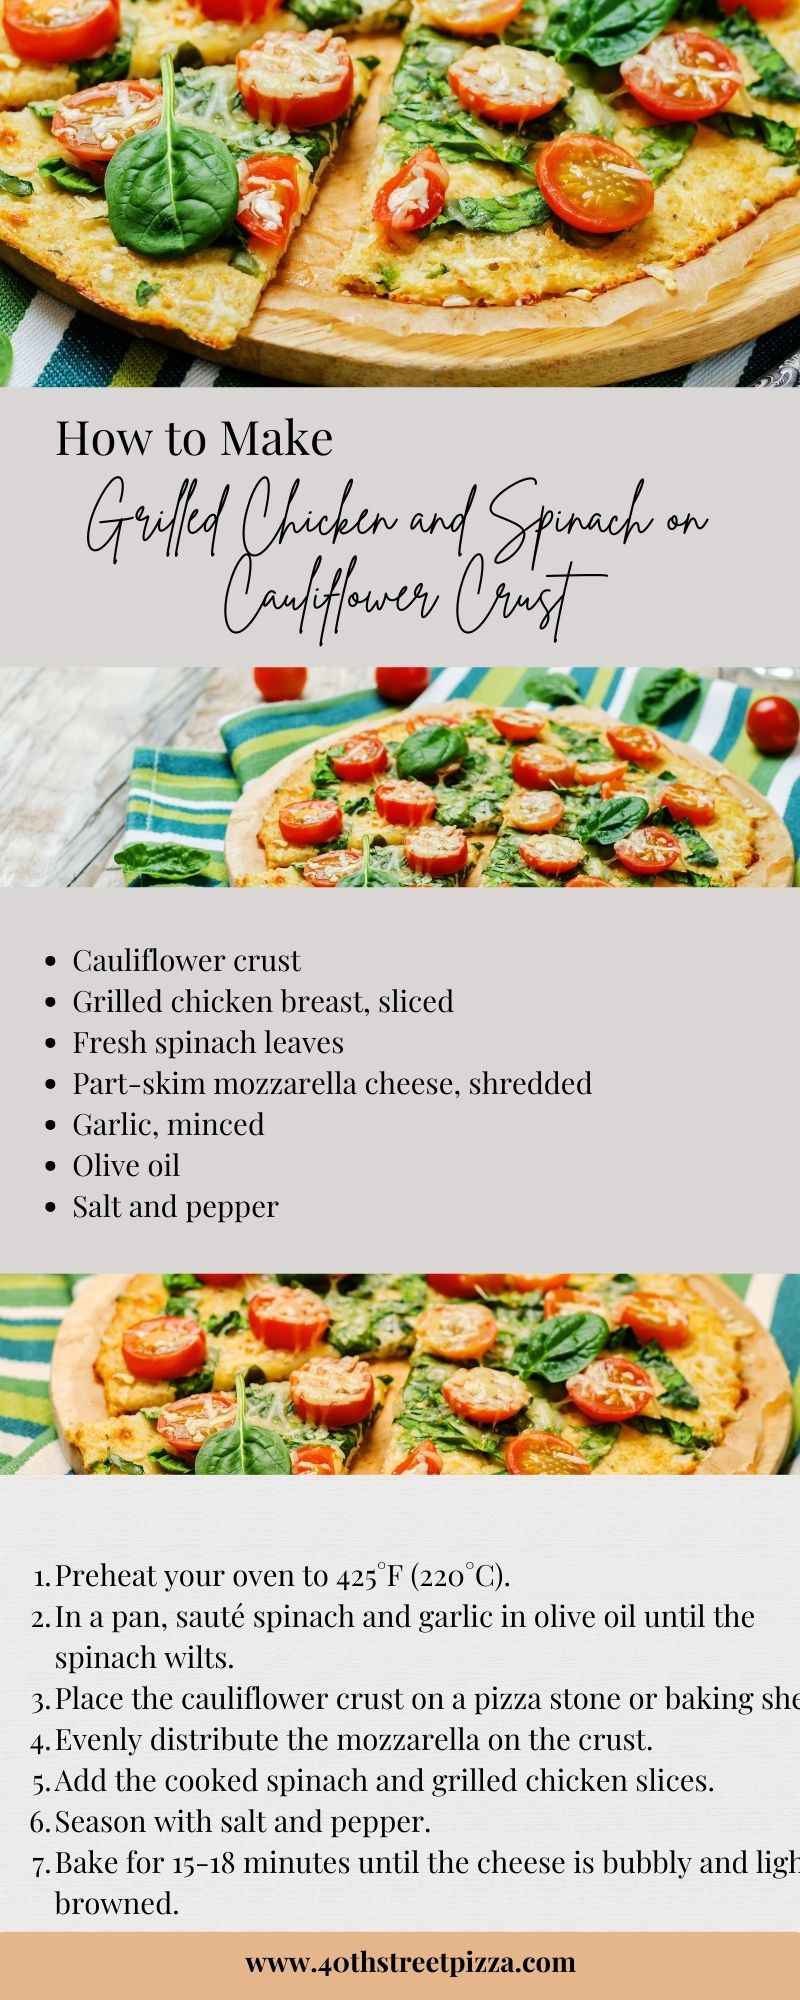 Grilled Chicken and Spinach on Cauliflower Crust infographic